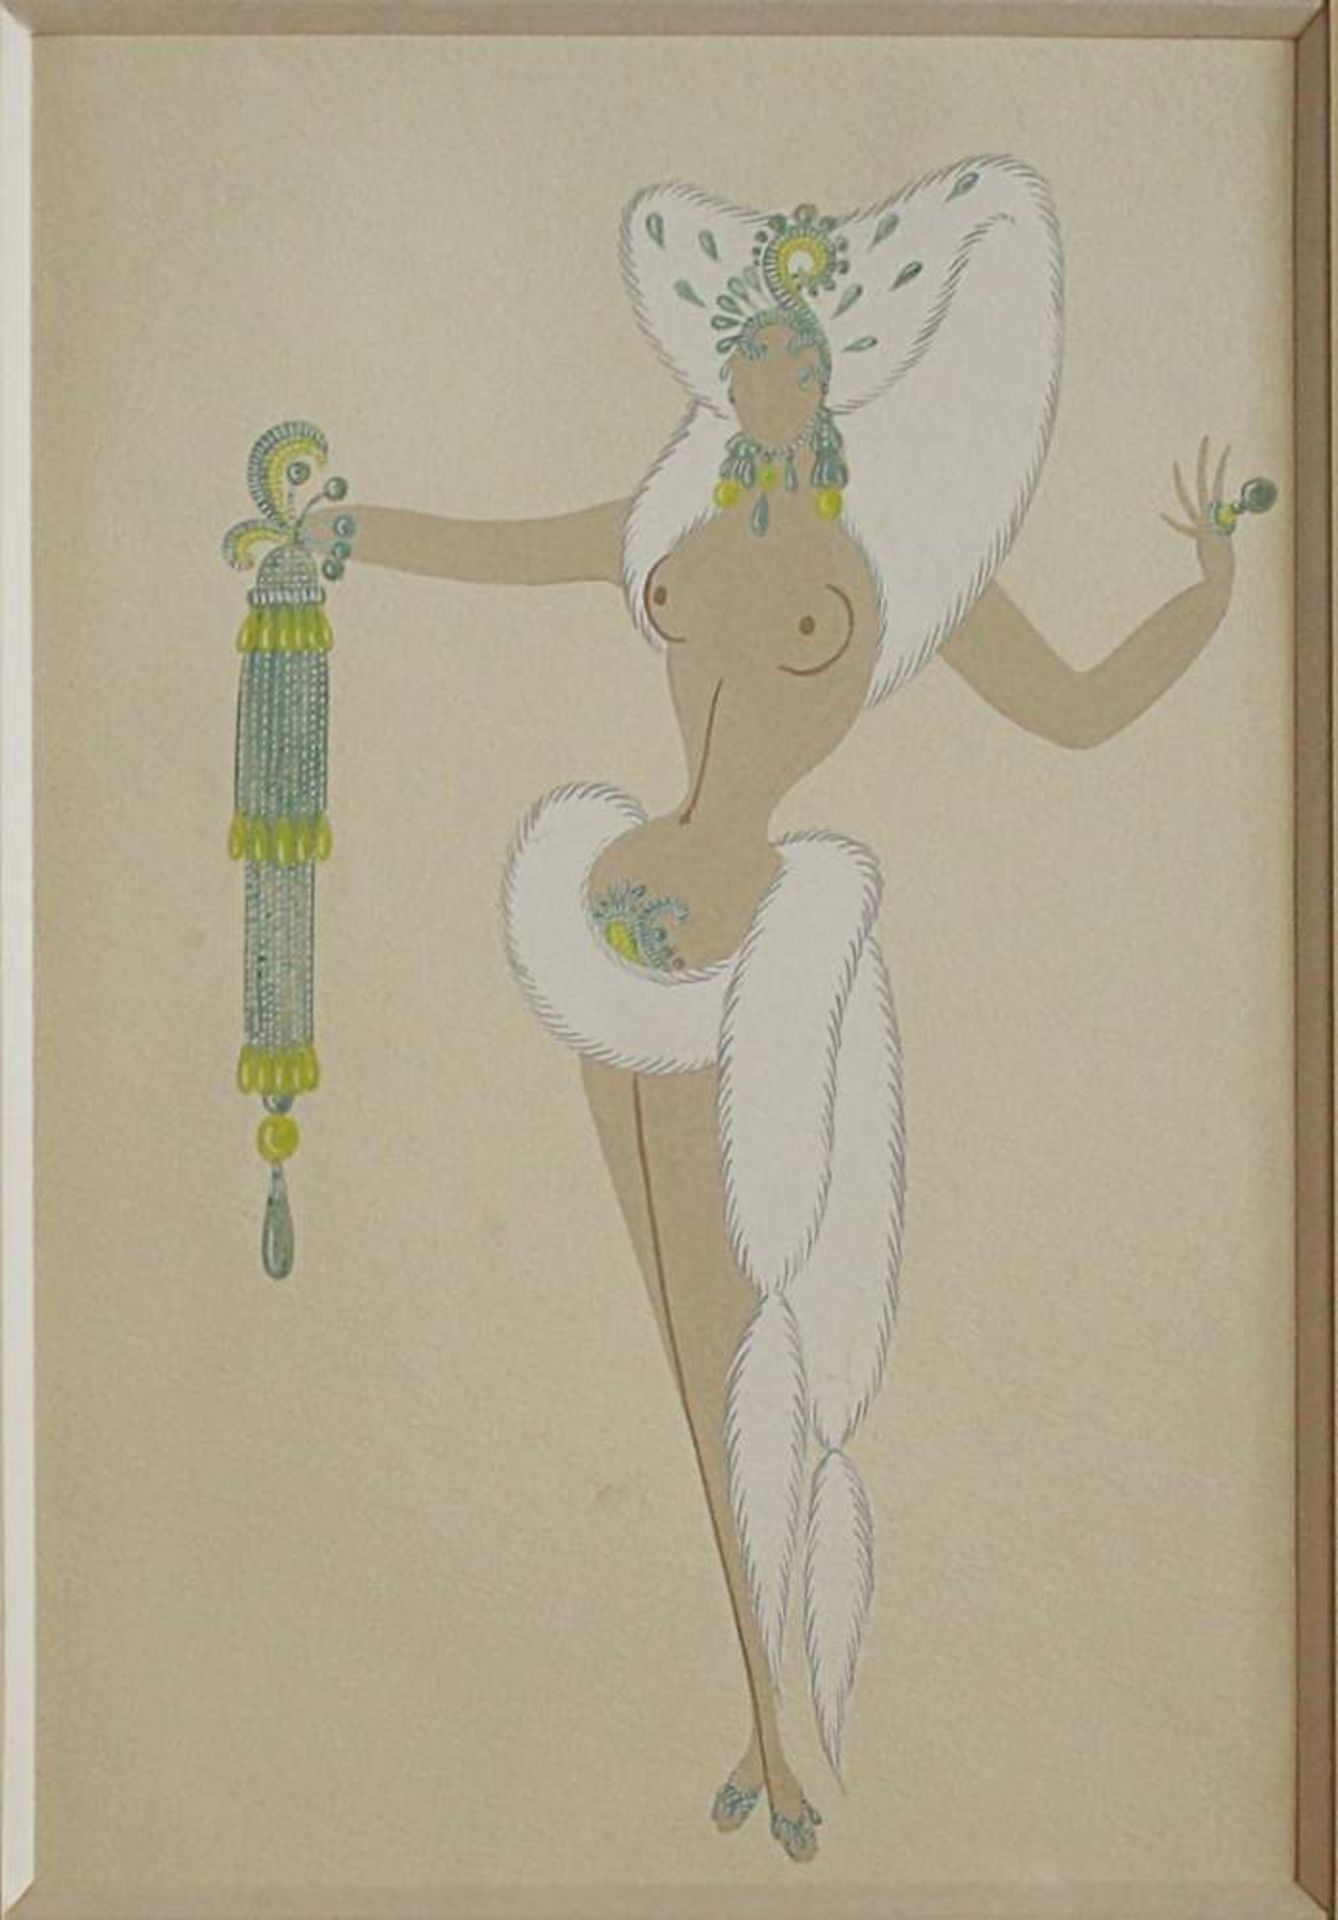 Erté eig. Romain de Tirotff, 1892 St. Petersburg - 1990 Paris, russisch/französischer Illustrator,